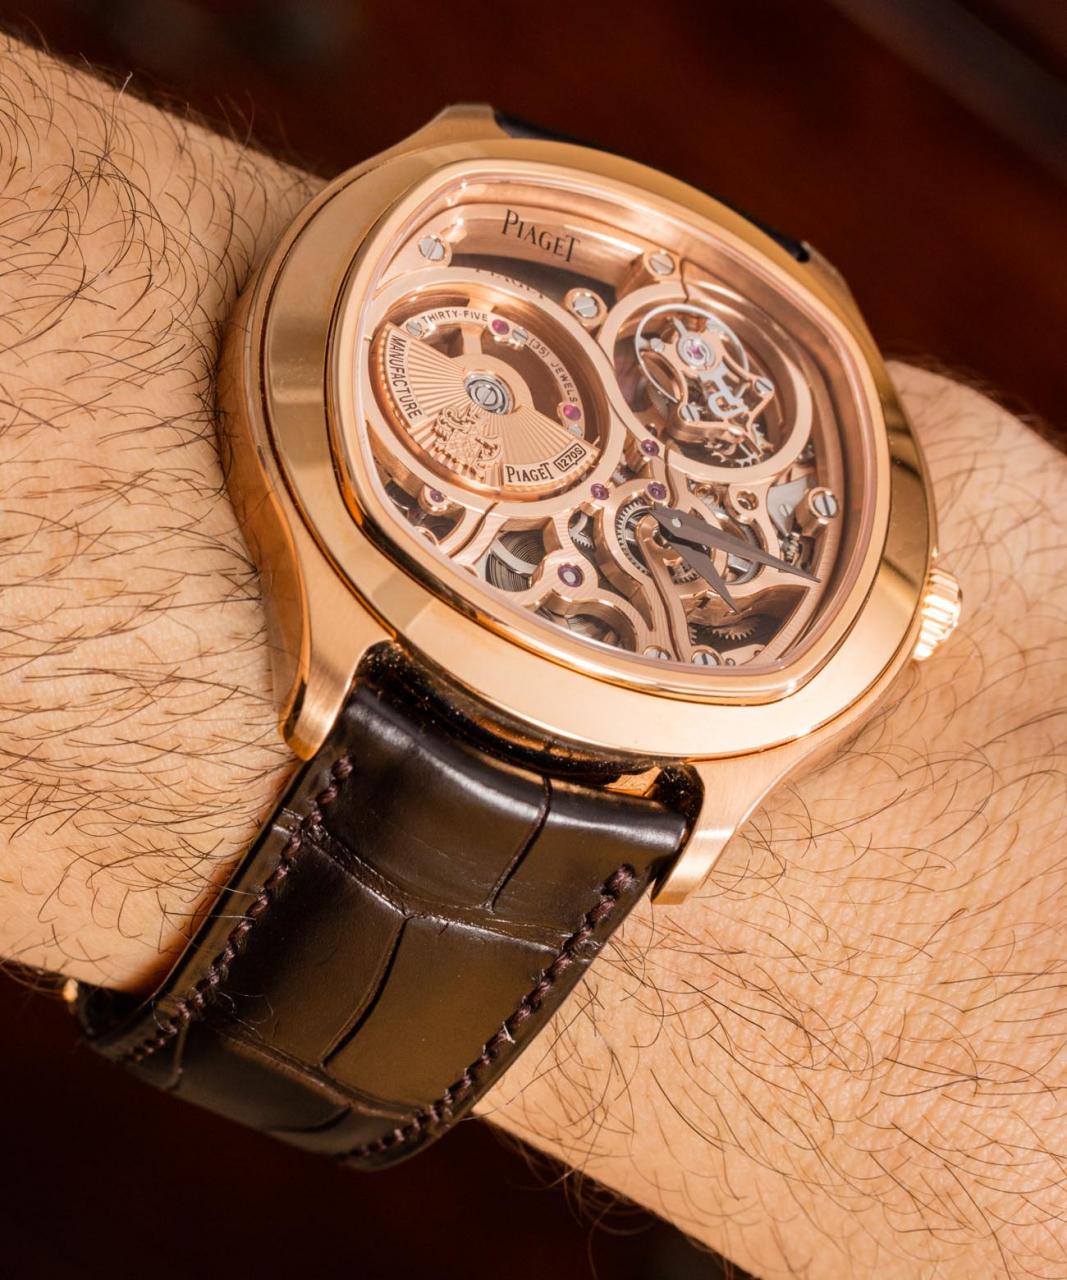 Piaget Emperador Cushion Tourbillon Skeleton Watch Revisited Hands-On 